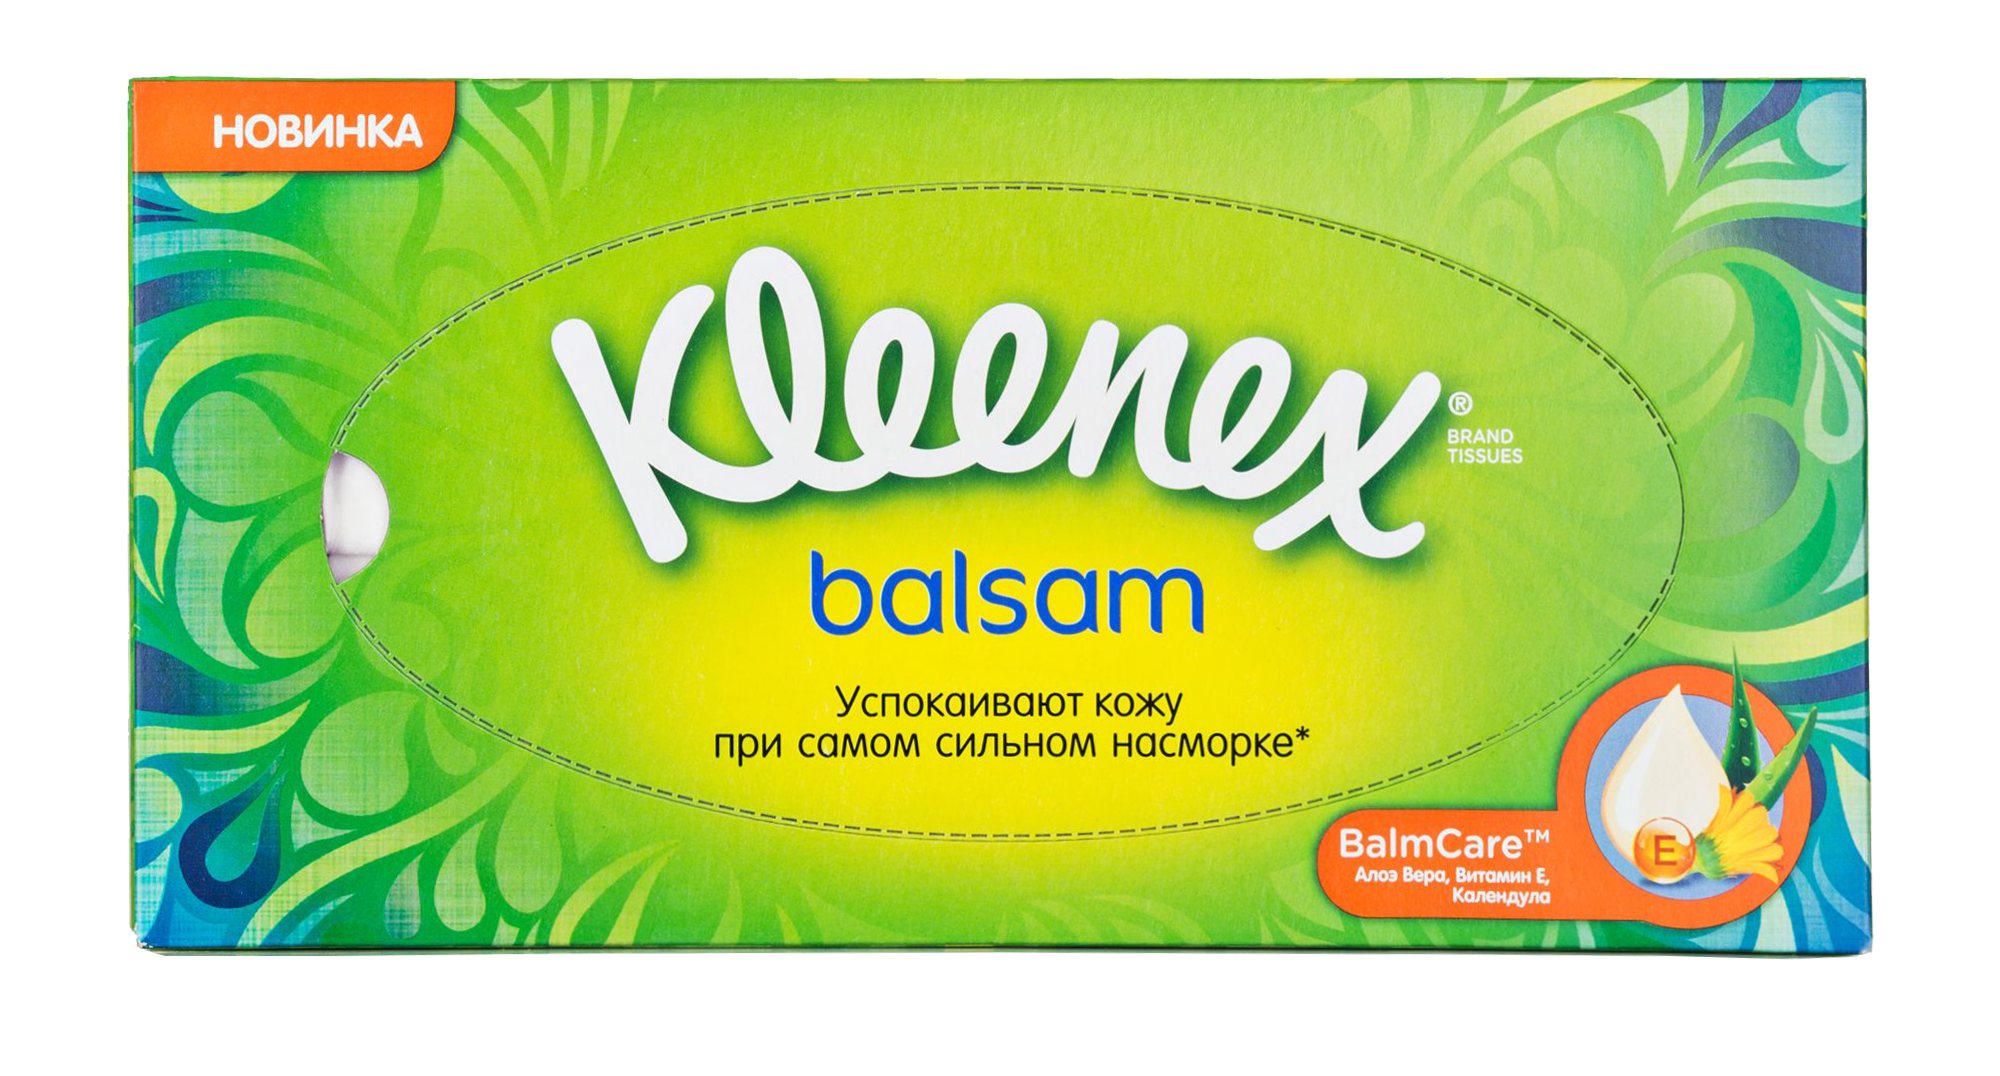 Салфетки Kleenex Balsam в коробке, 72 шт. - фото 1